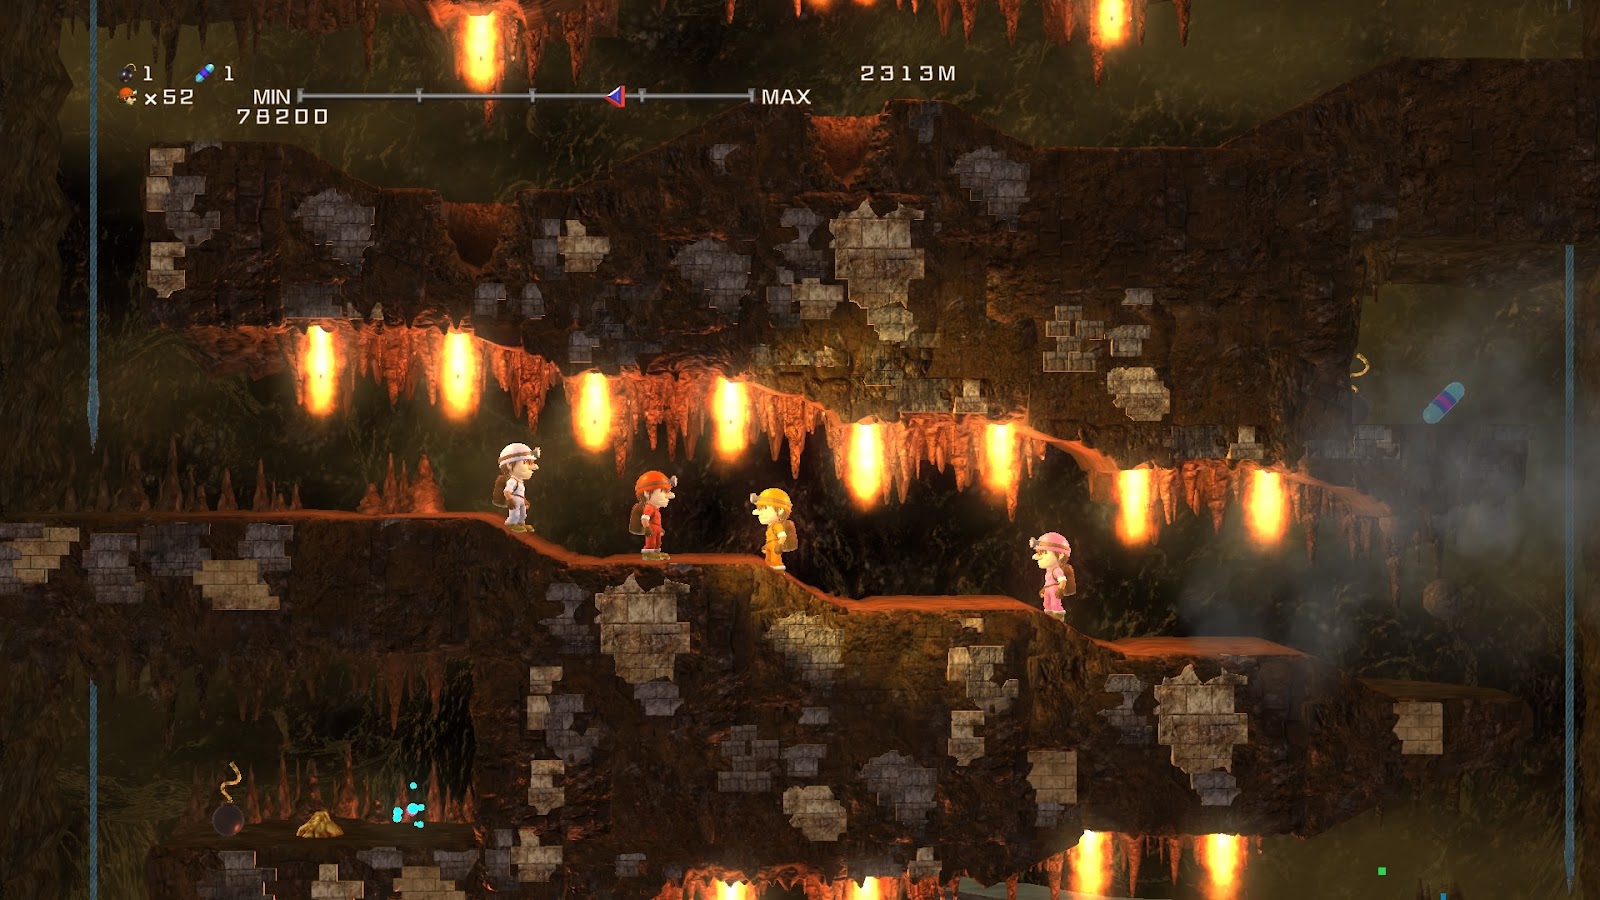 A screenshot showing the four player mode